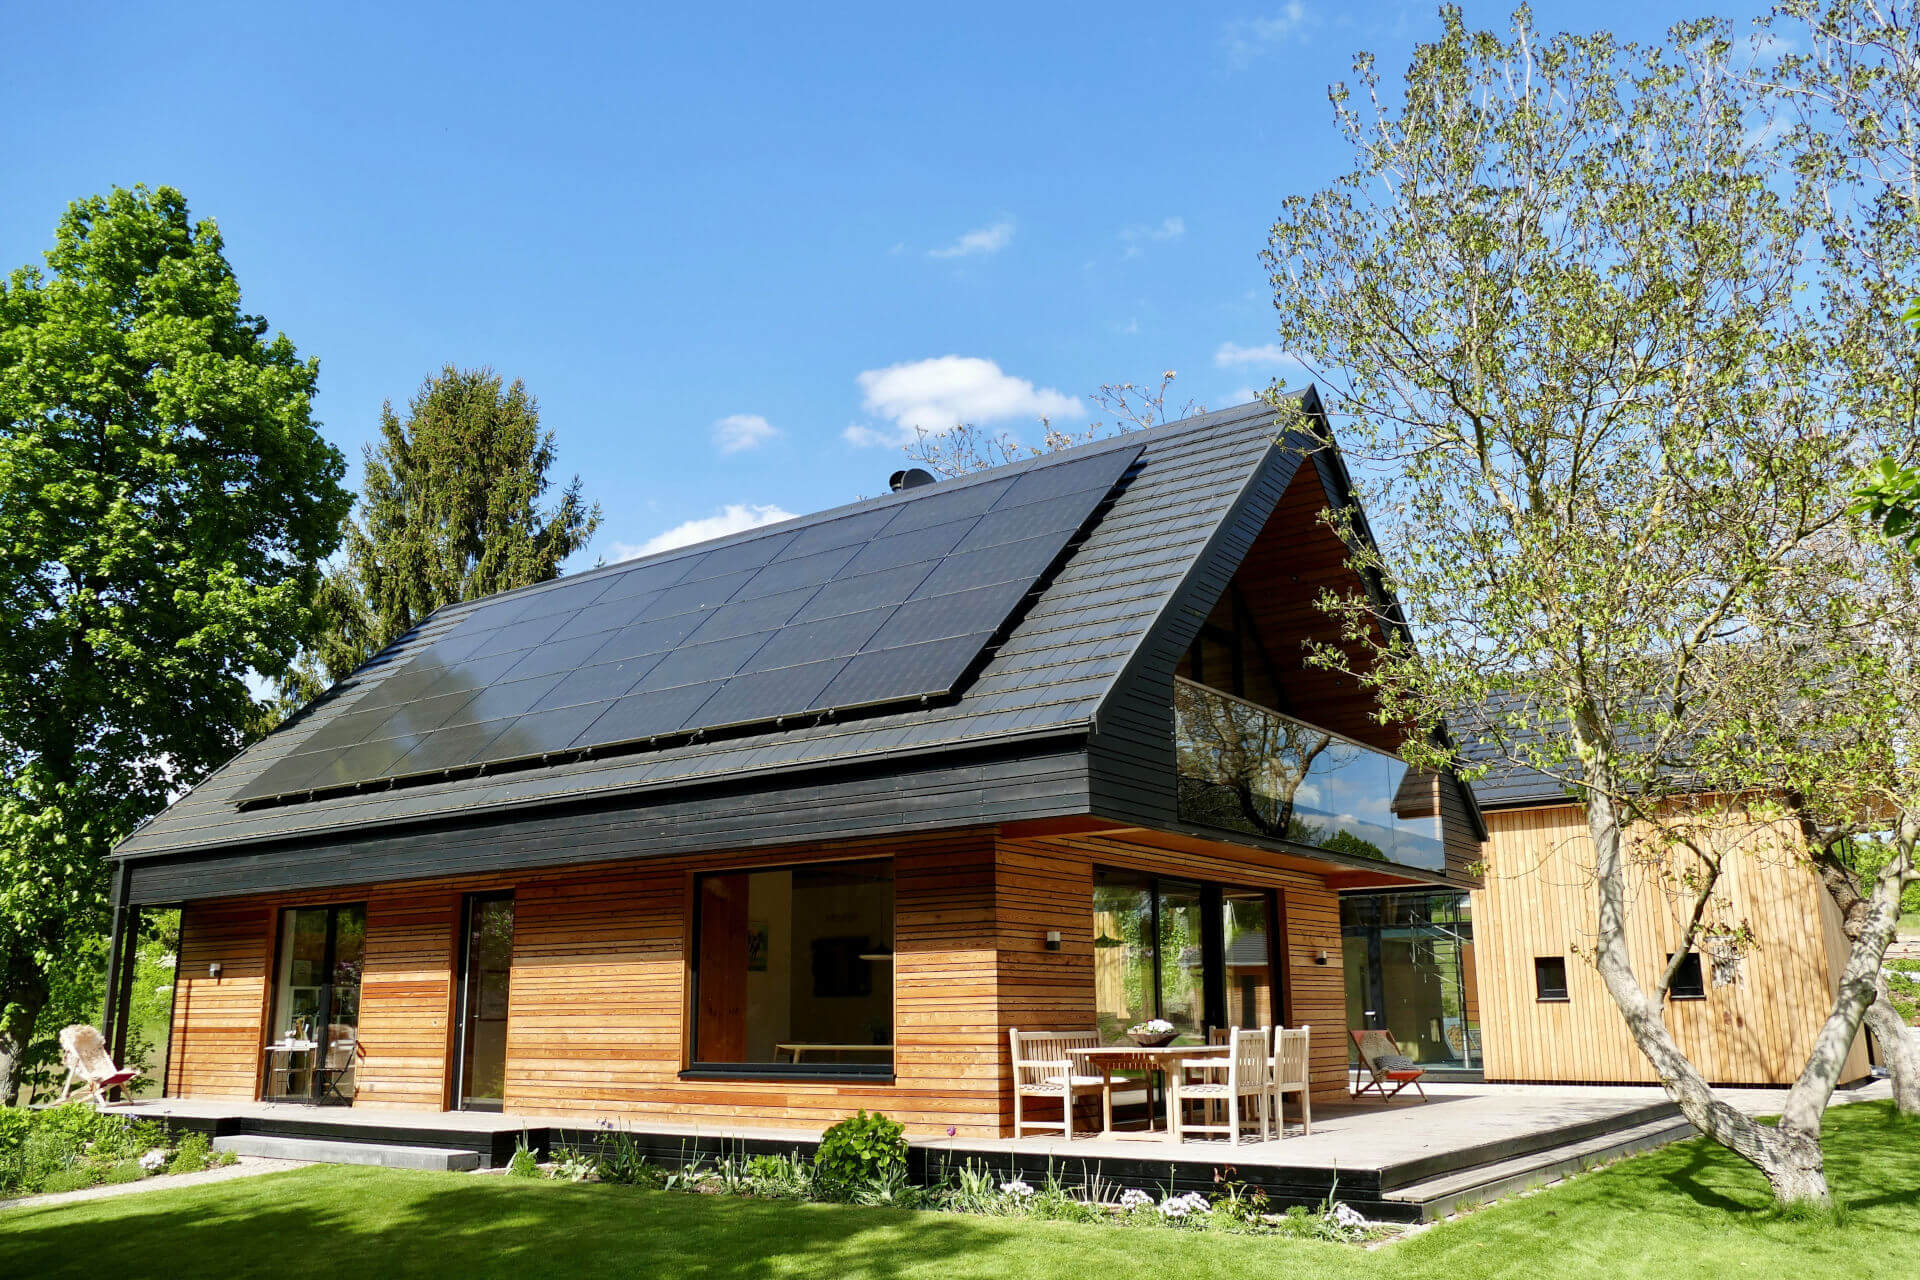 Holzhaus mit Photovoltaiksystem